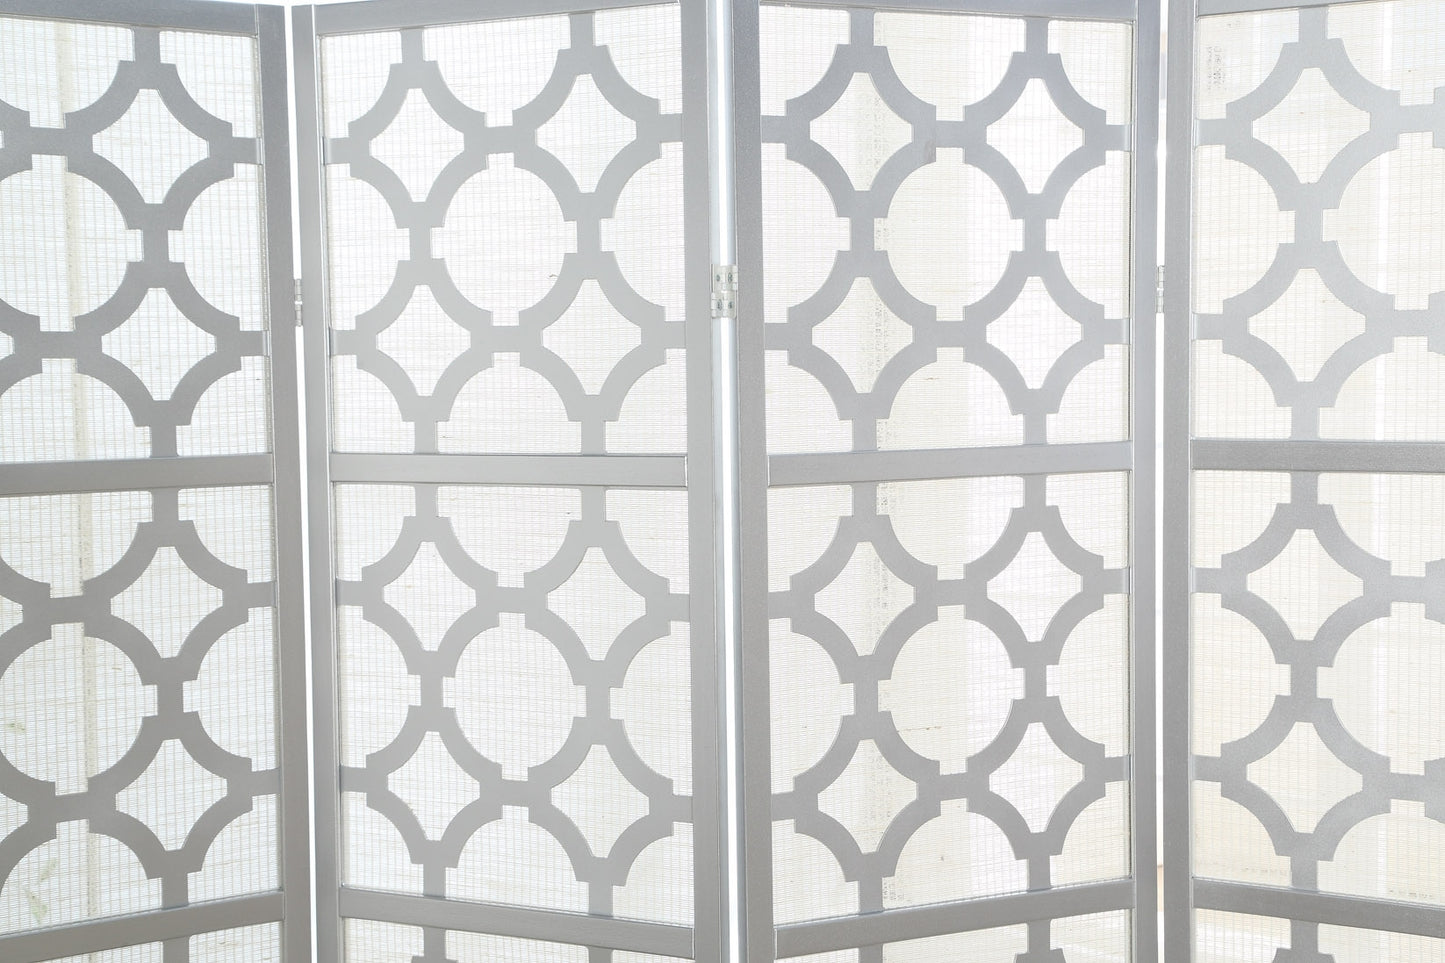 Quarterfoil infused Diamond Design 4-Panel Room Divider, Silver